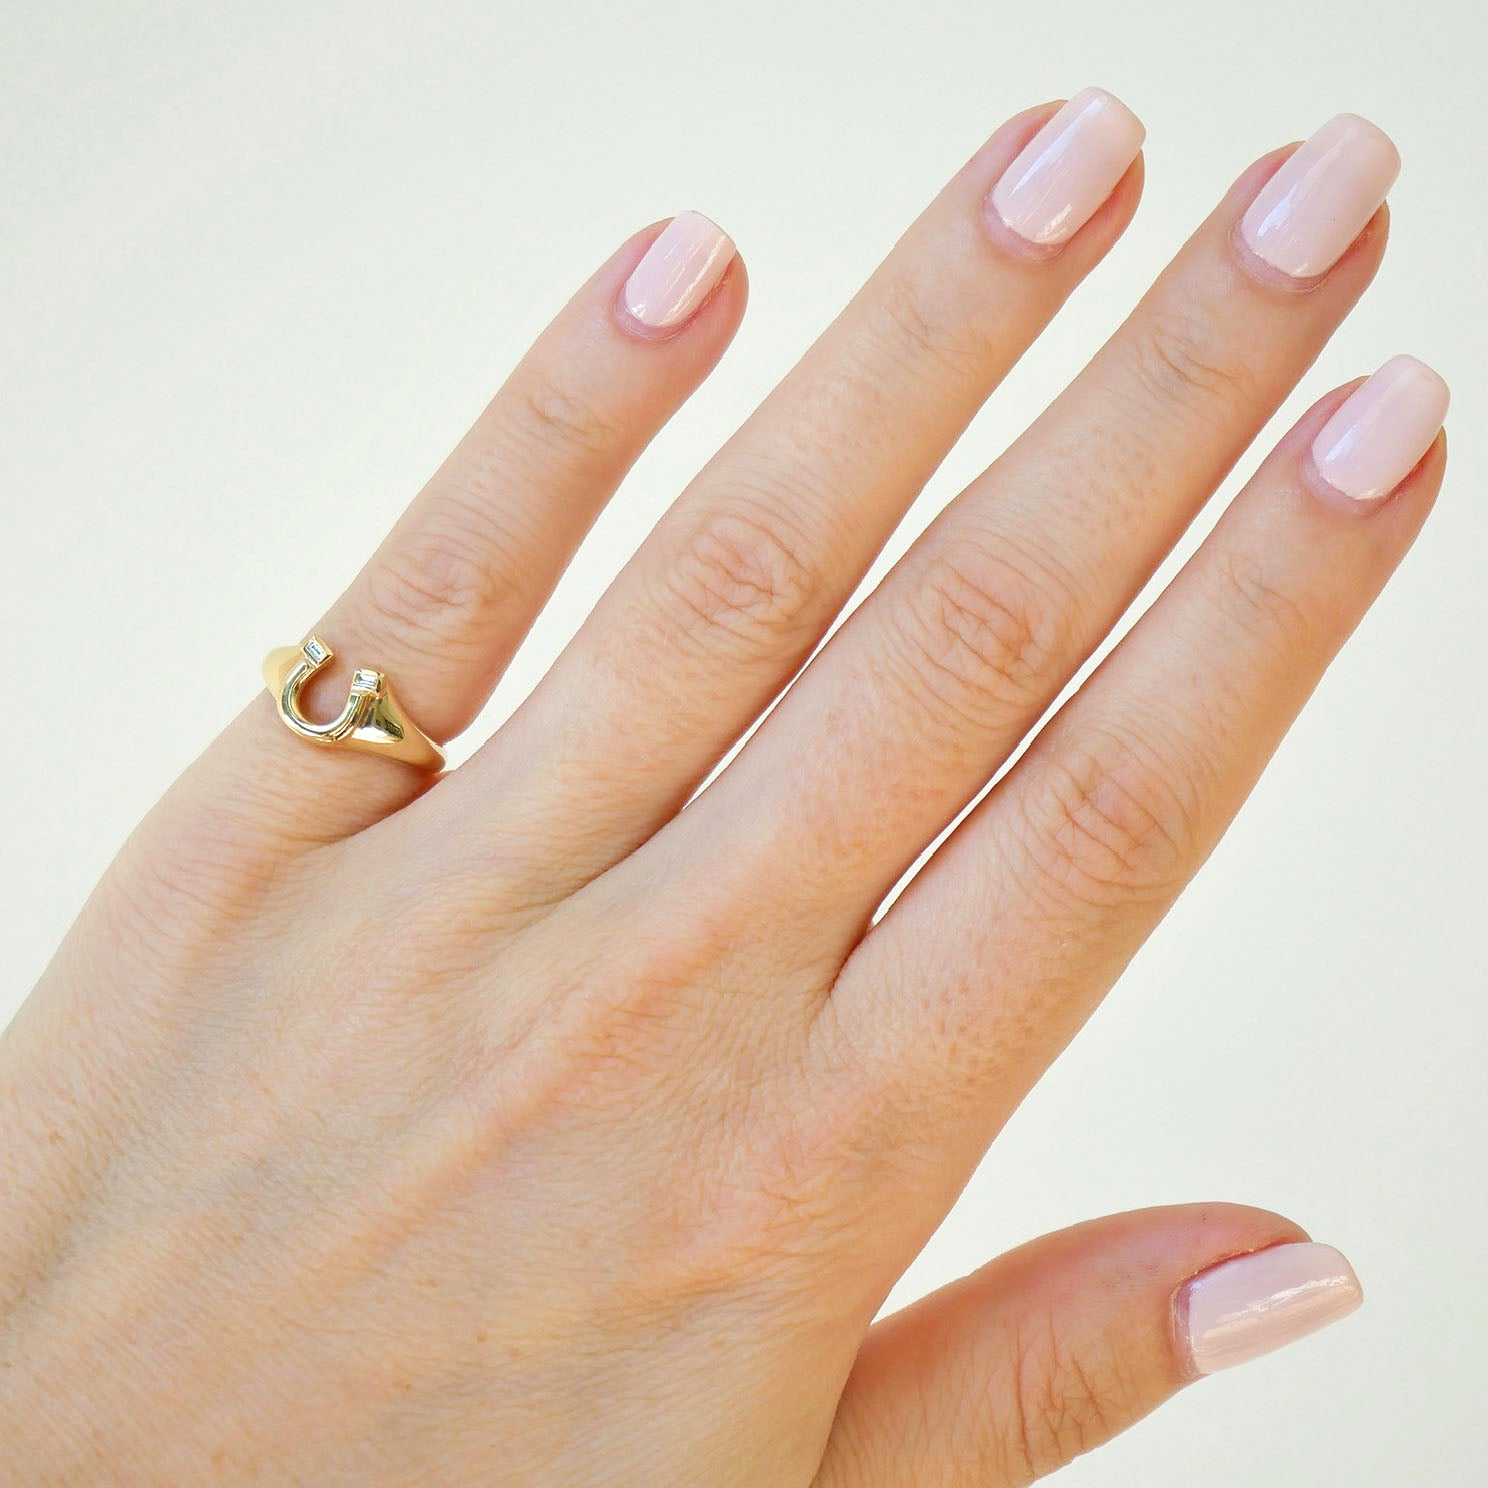 Lucky Horseshoe Signet Ring styled on pinky finger of model